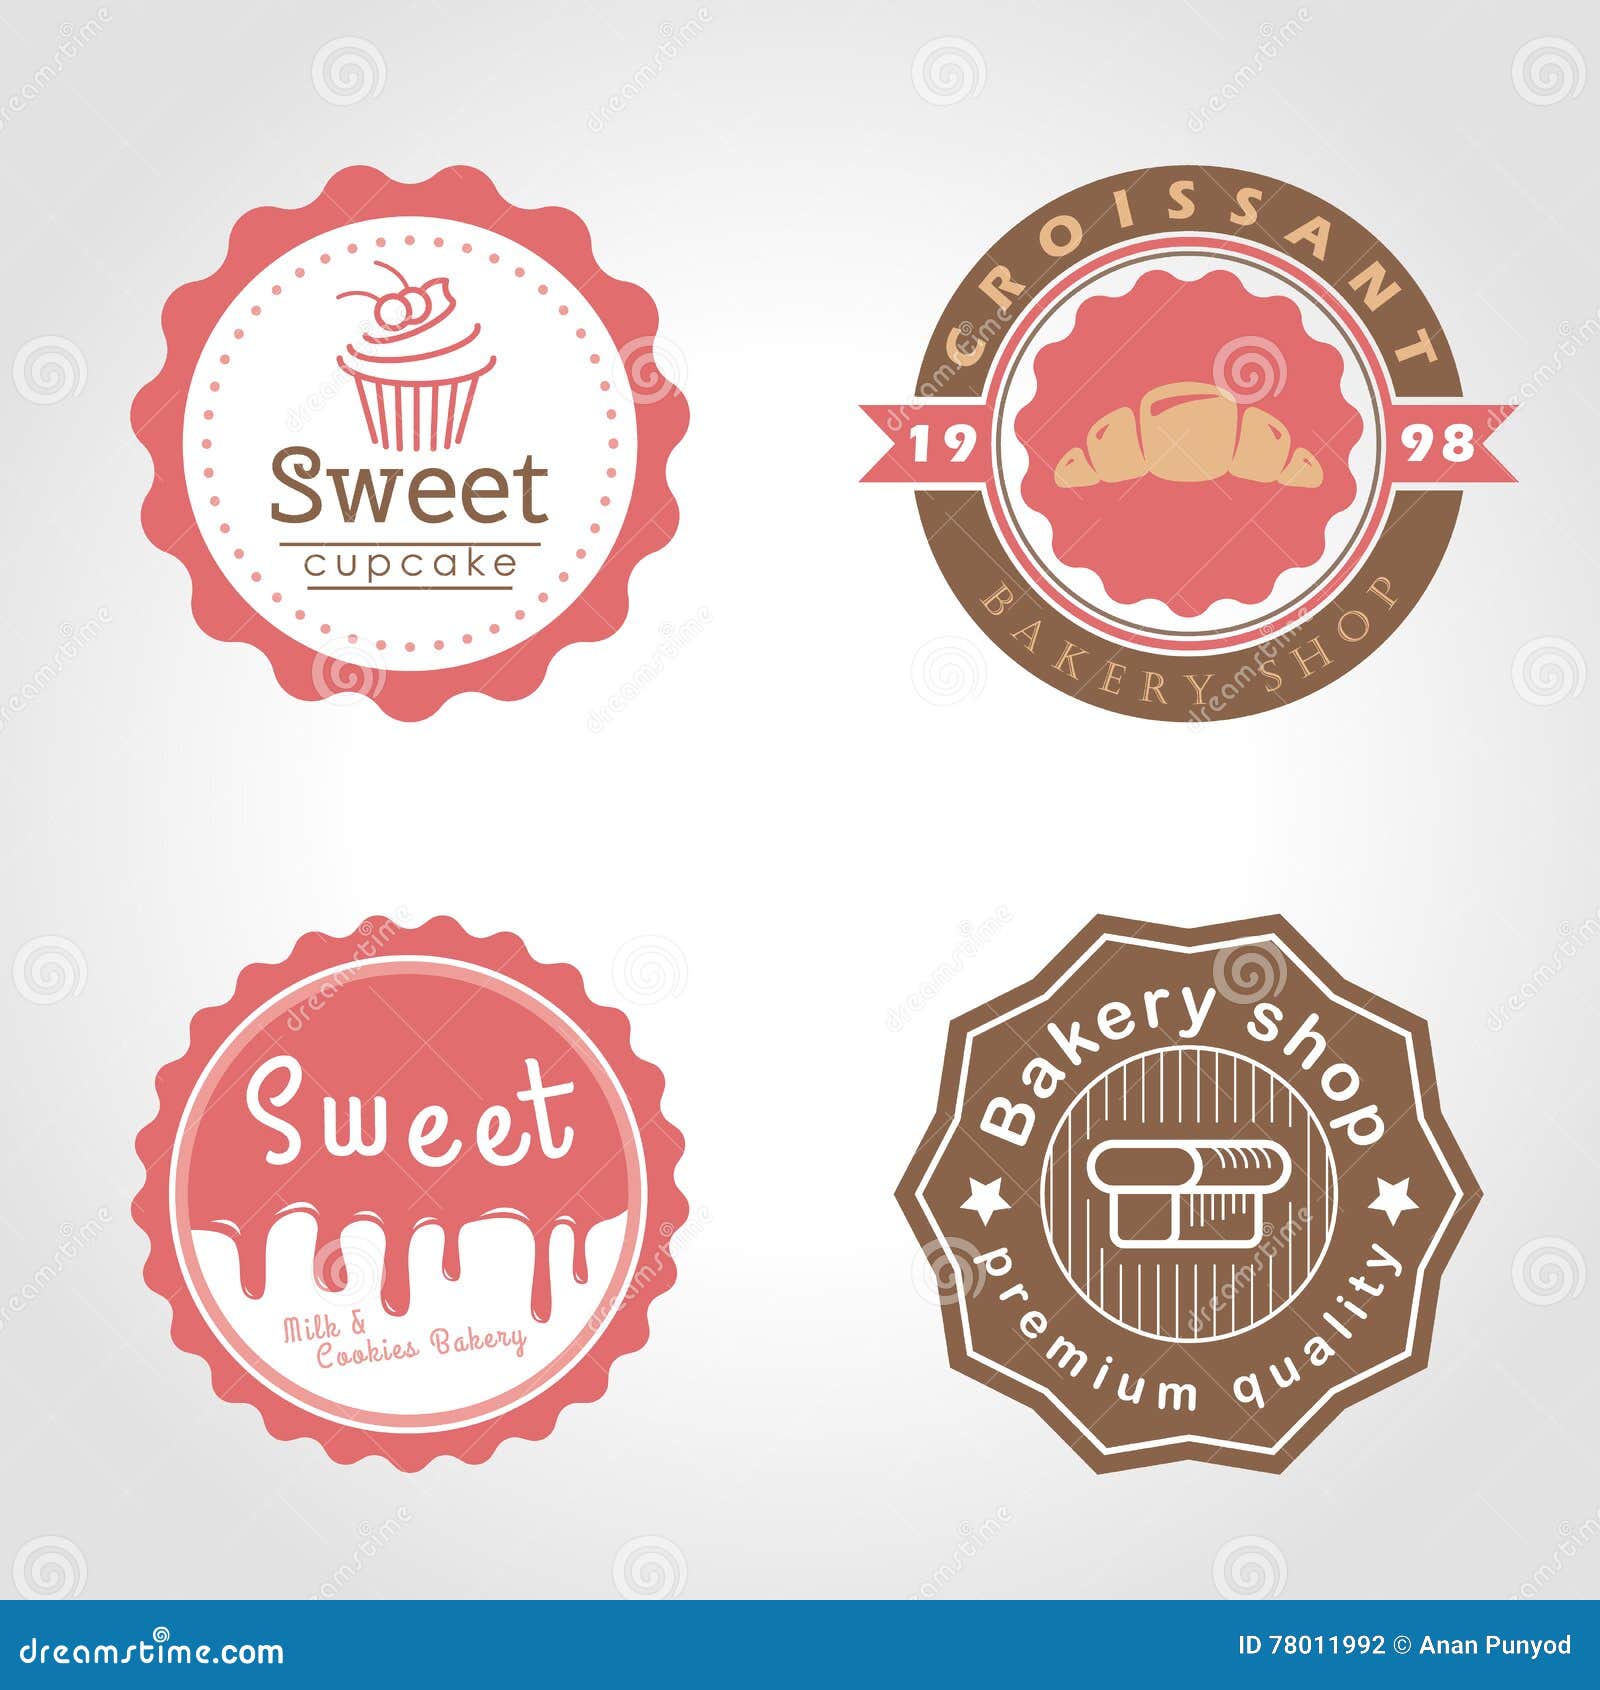 sweet cupcake and bakery and milk shop circle logo   